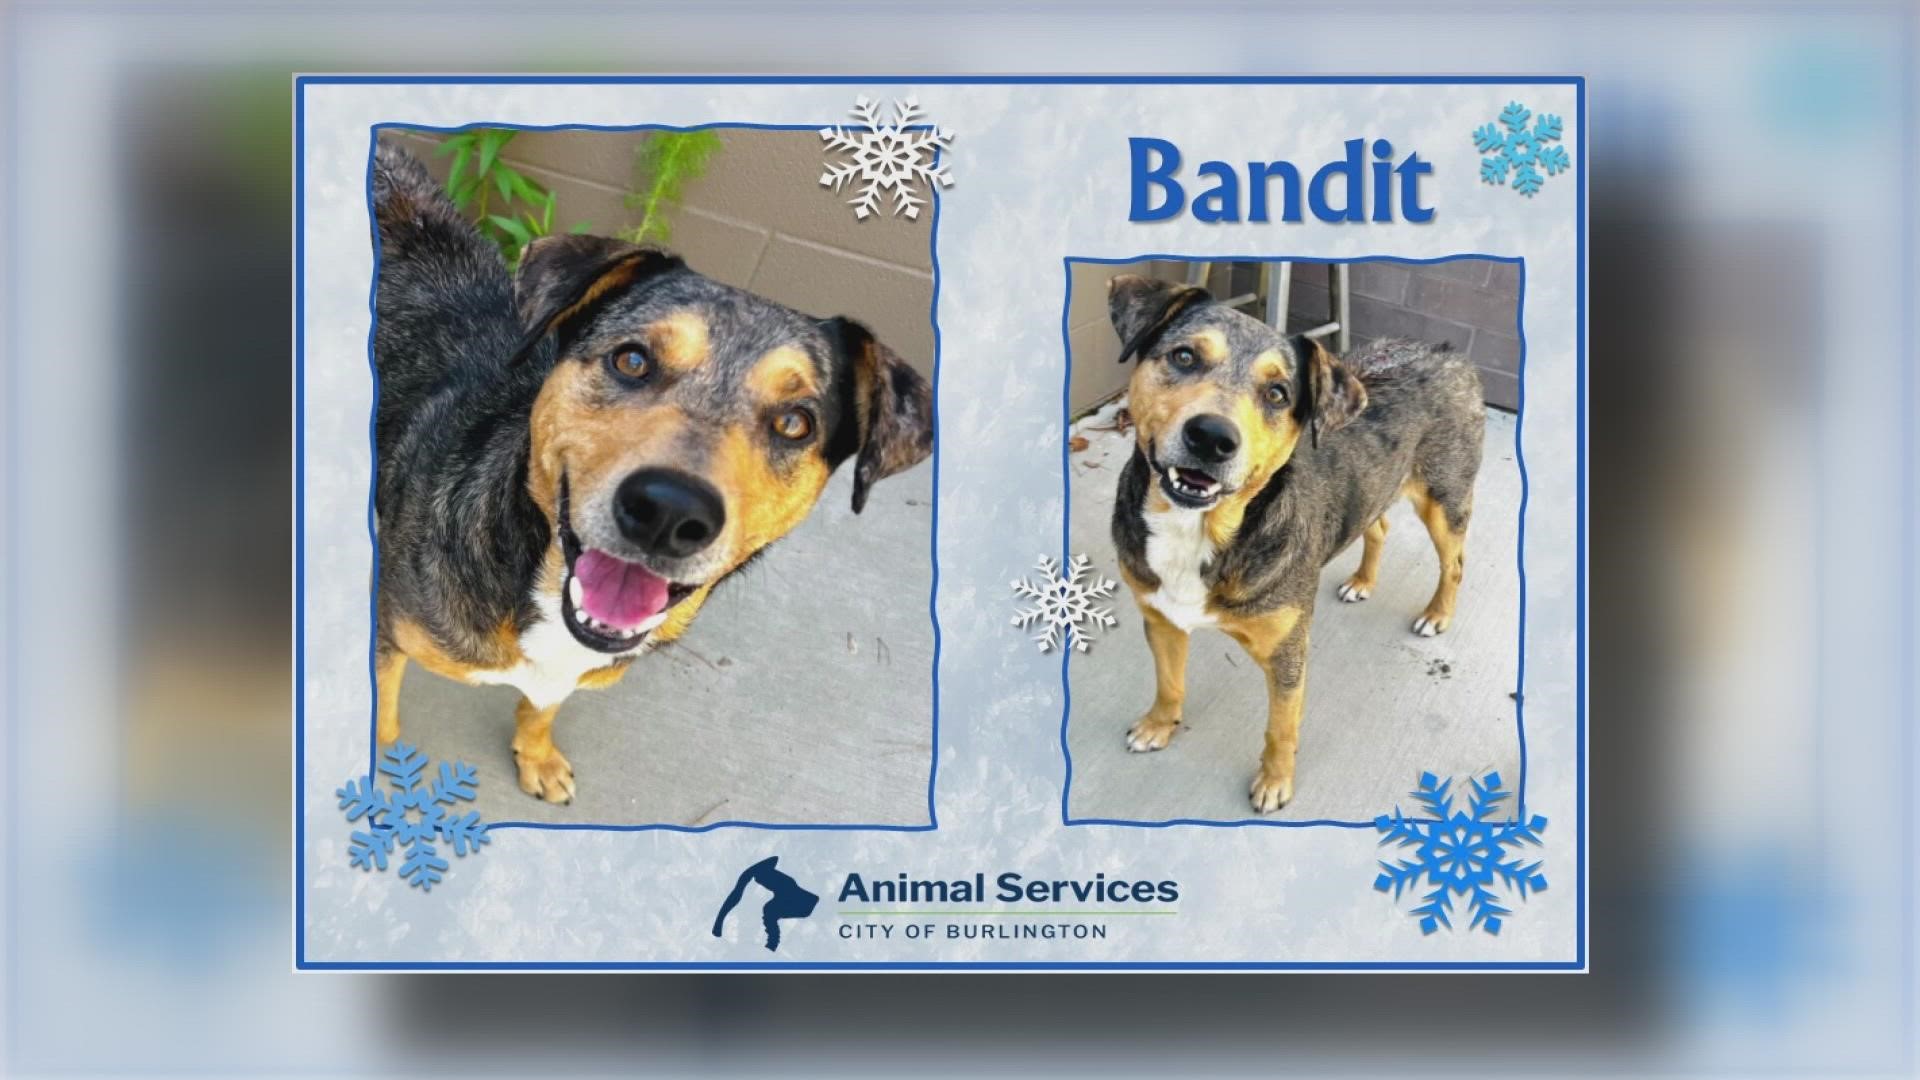 Let’s get Bandit adopted!